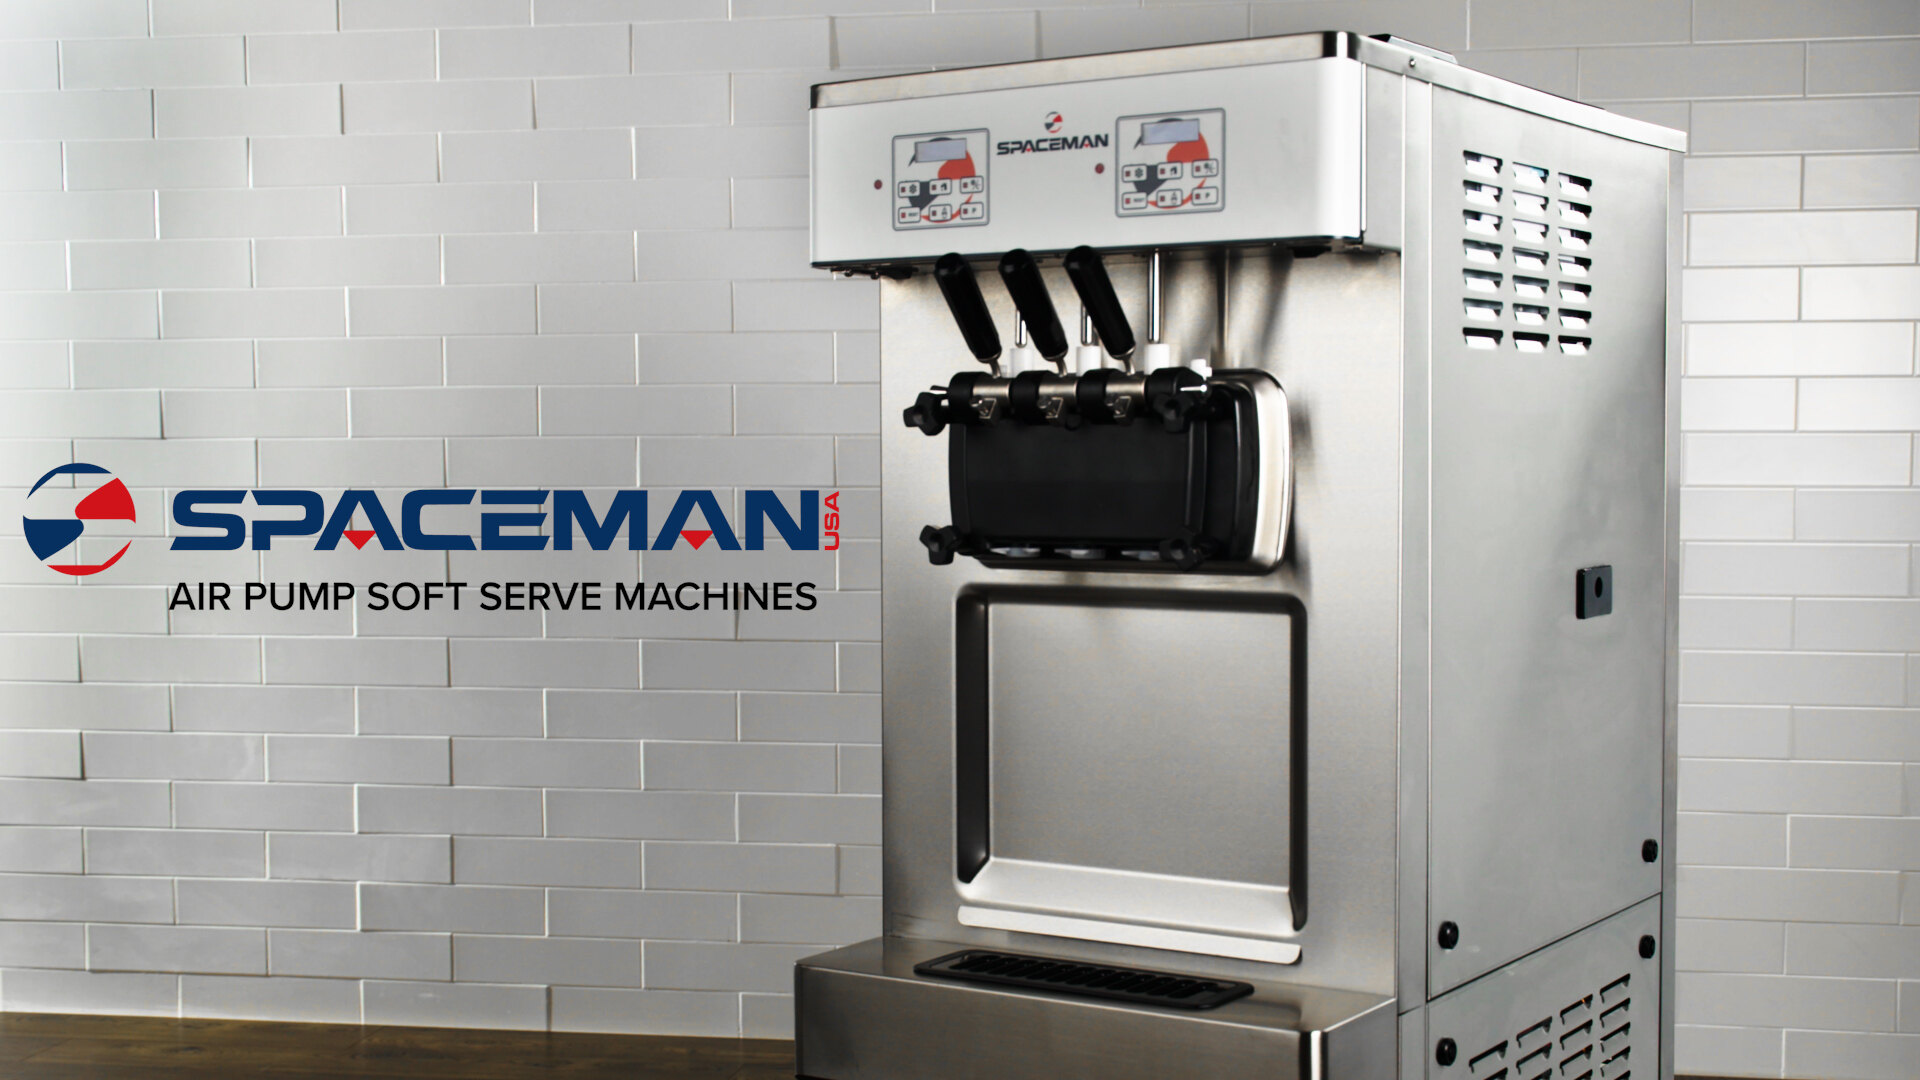 Spaceman USA (2) 8.45 Quart Commercial Soft Serve Machine With Air Pump for  sale online